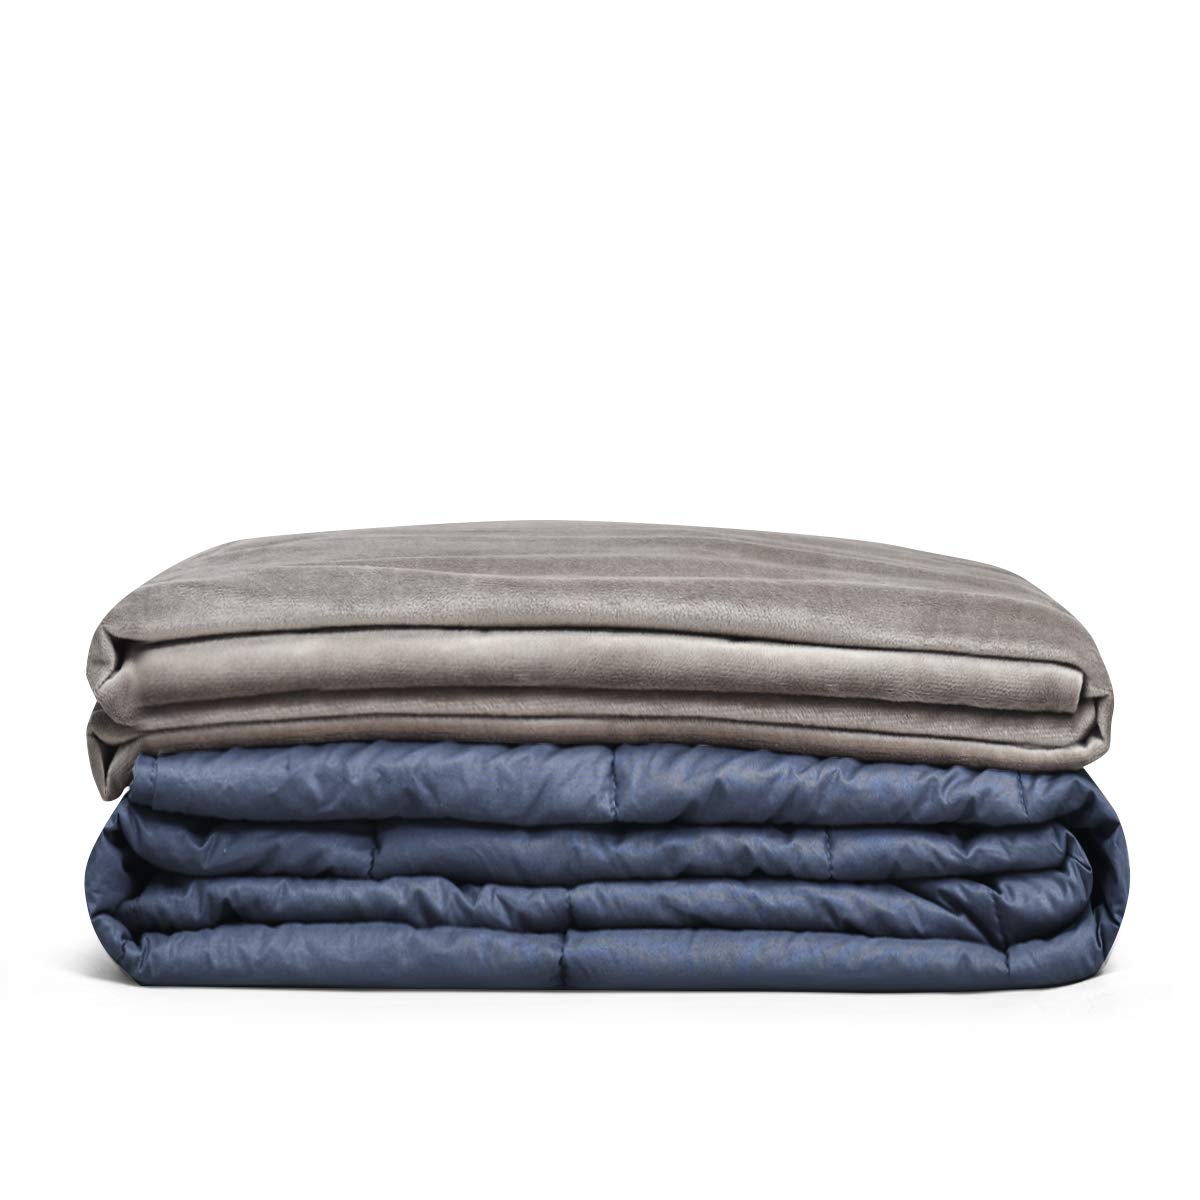 Premium Weighted Blanket, 20lbs |60'' x 80''| Queen Size